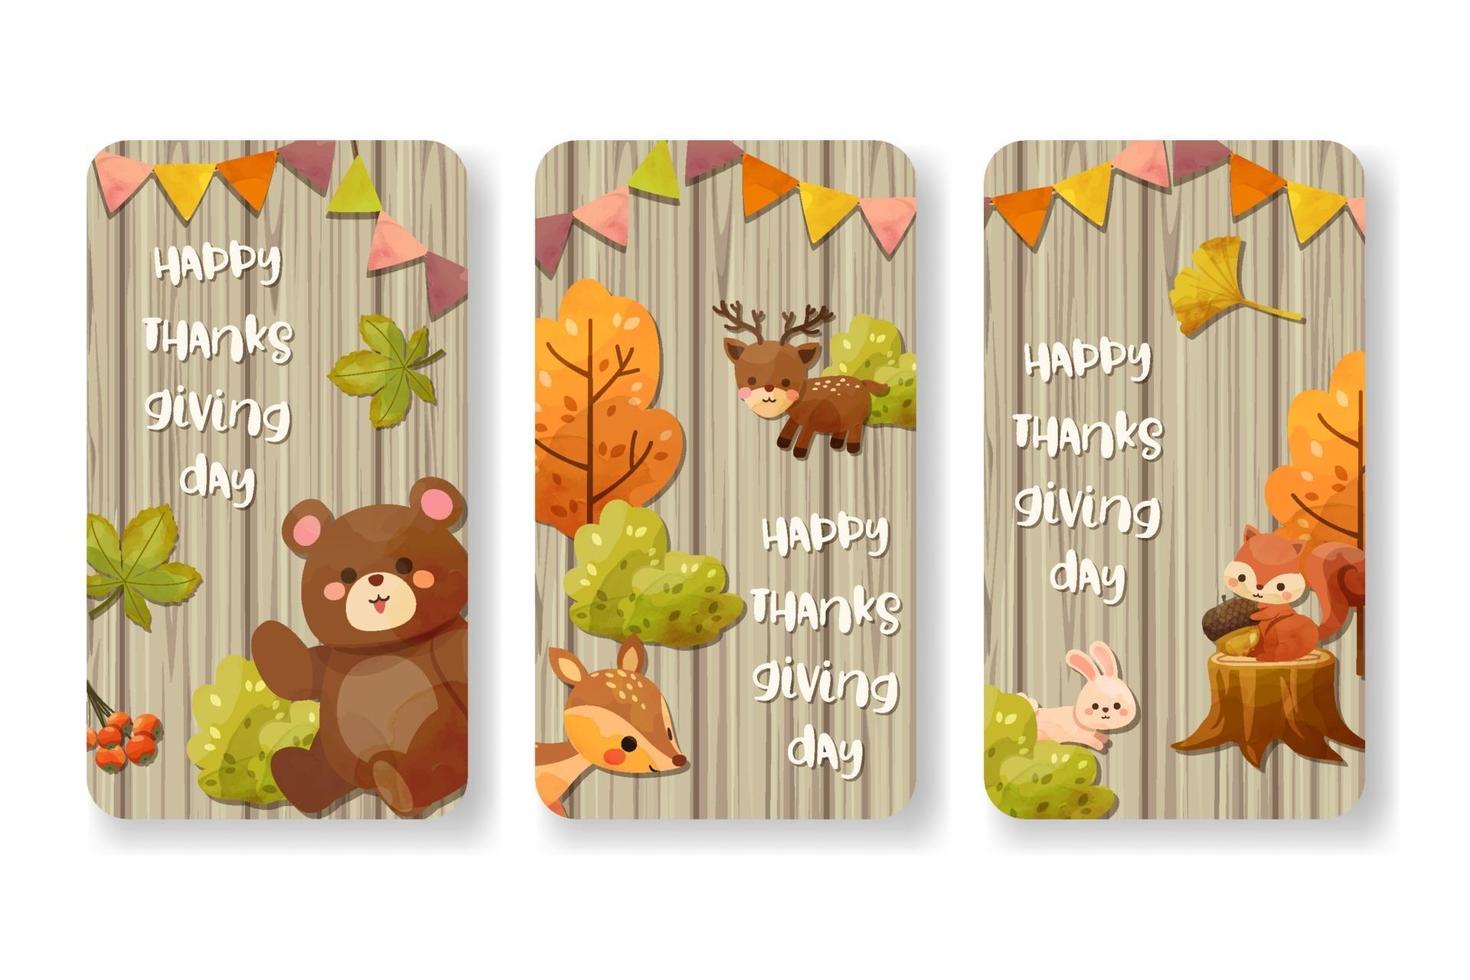 happy thanksgiving day-kaart met esdoornblad en dier. vector